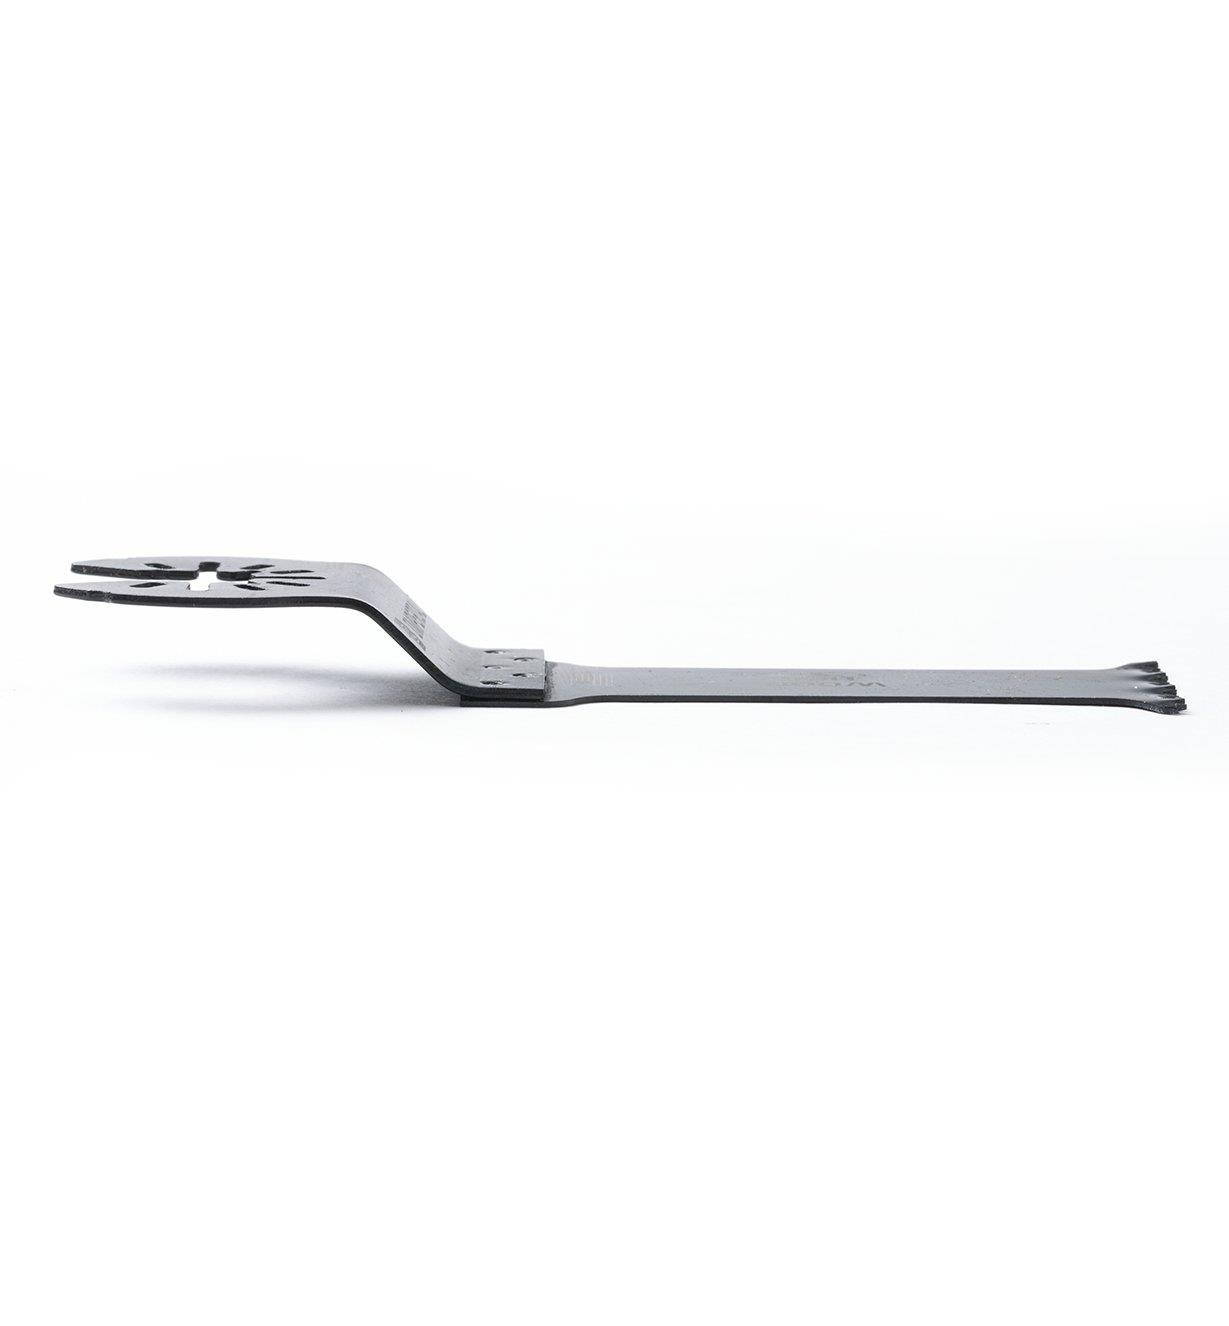 77J5904 - 1 1/4" x 2 9/16" 16 tpi X-Long High-Carbon Steel Blade, each